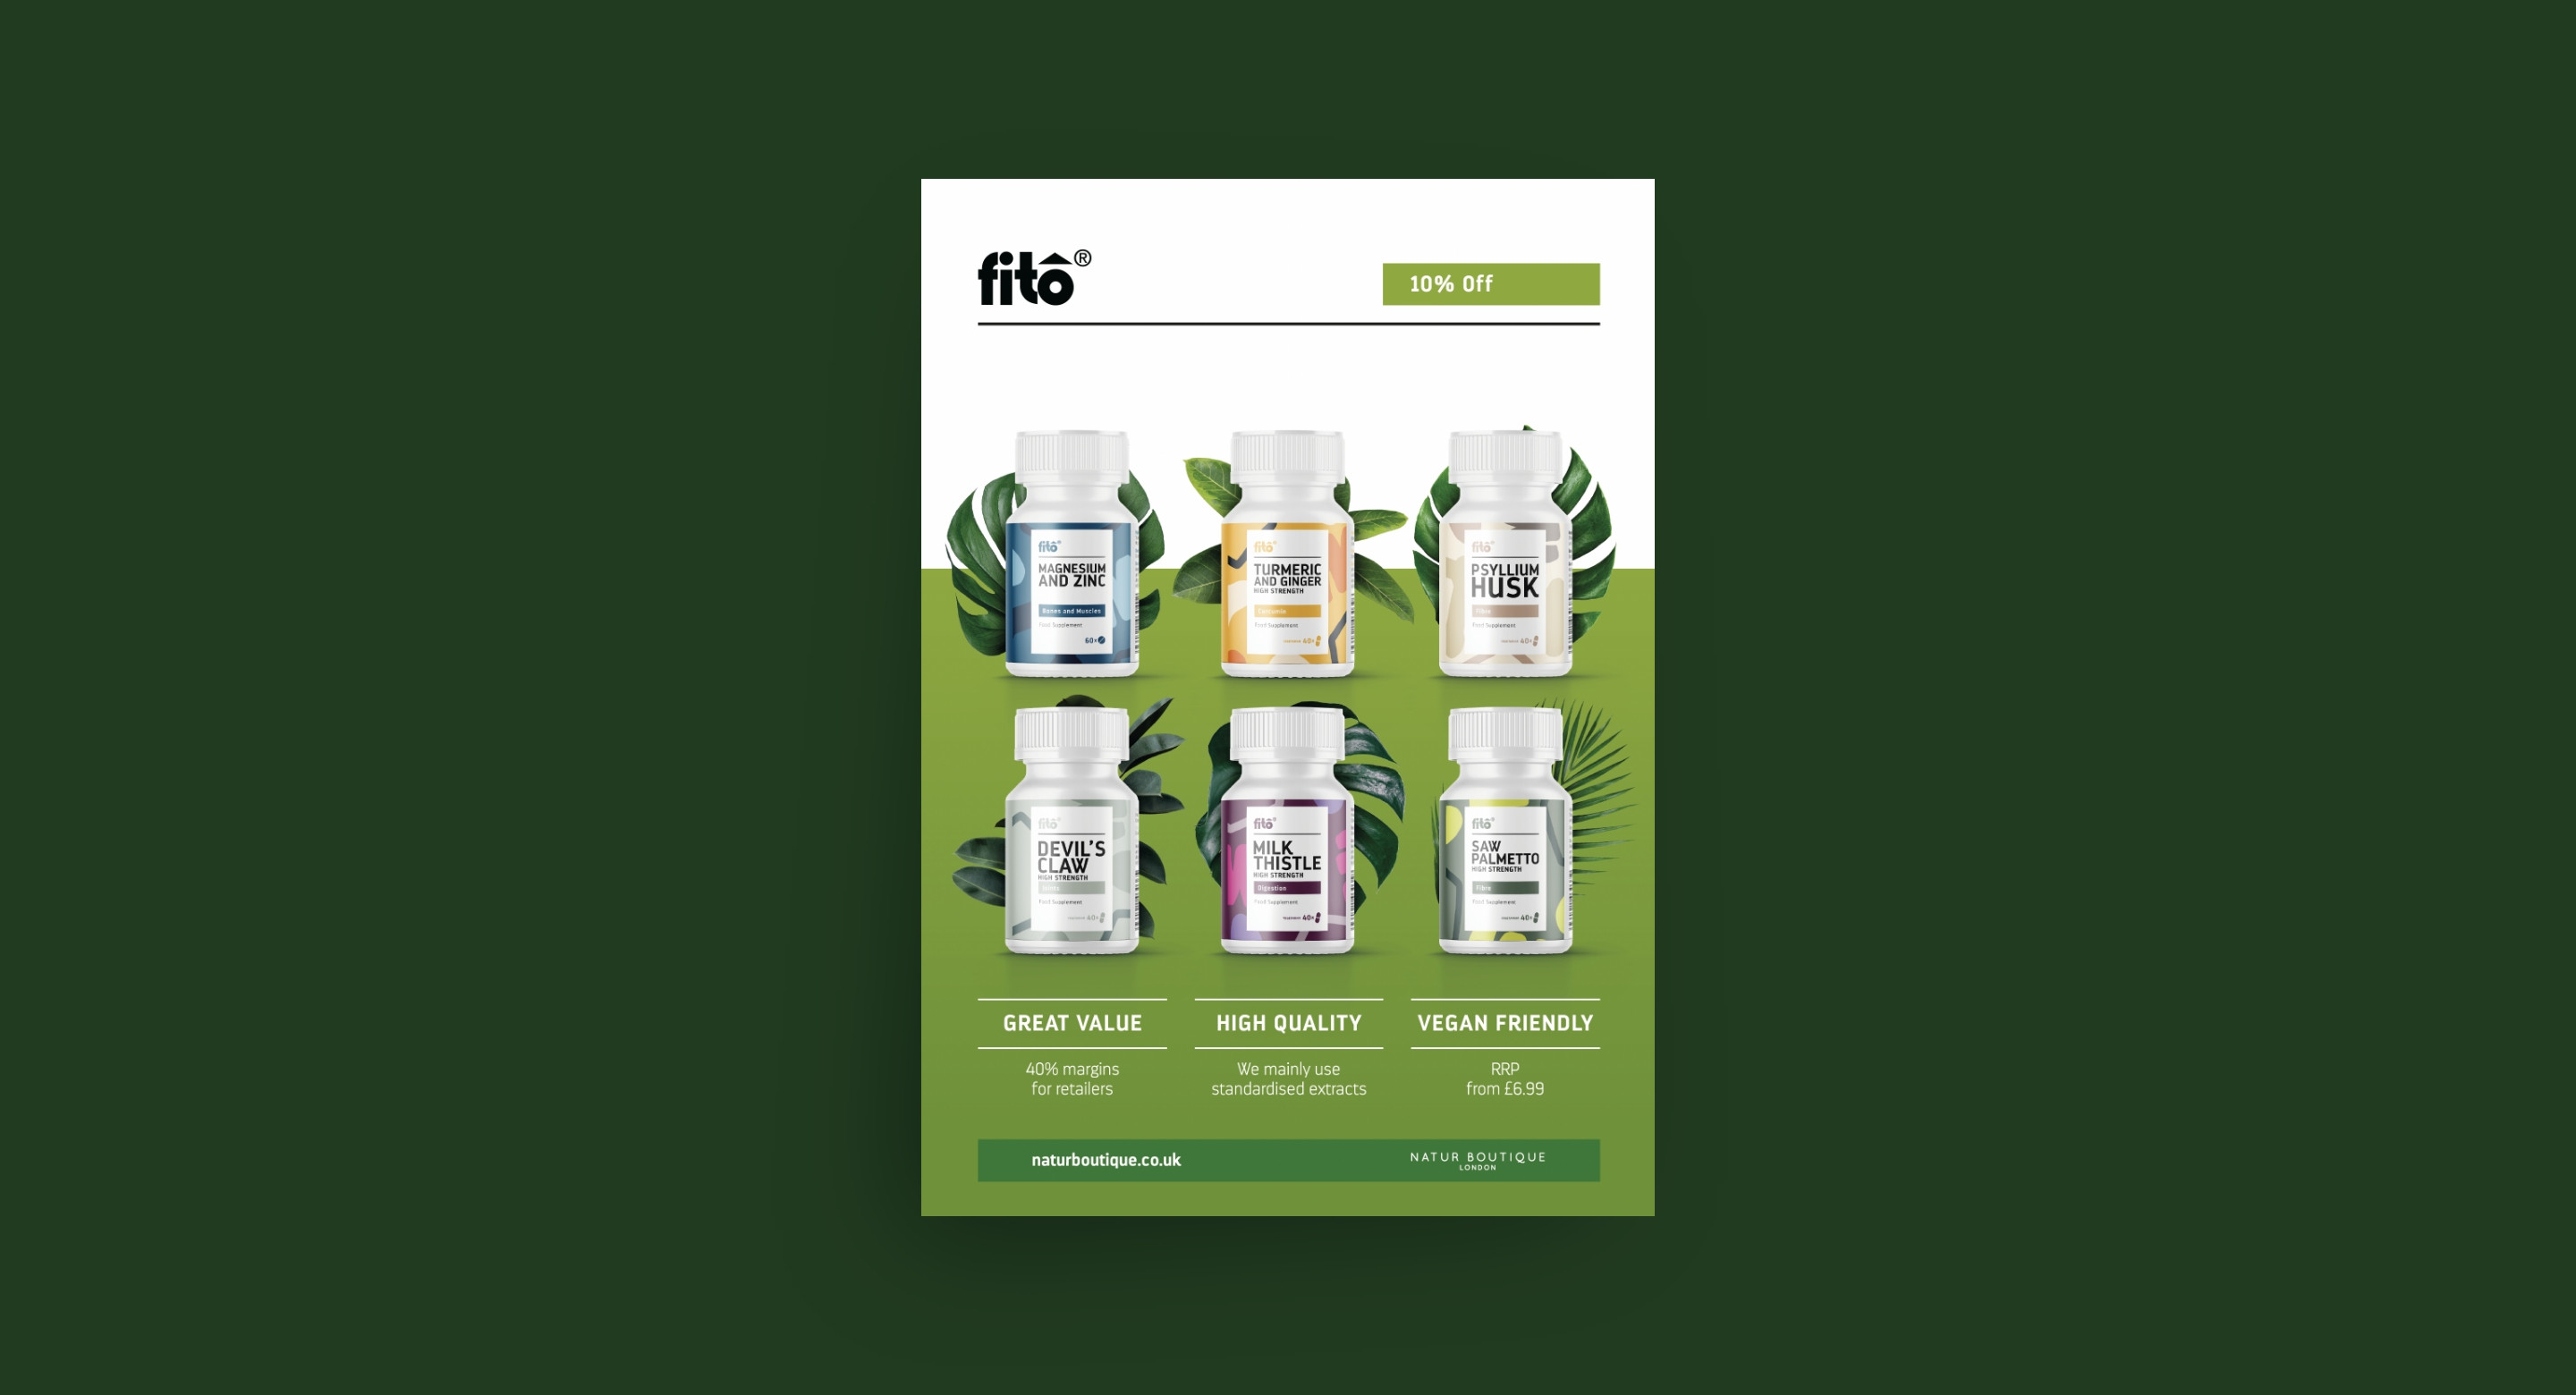 Food supplement brand wholesale advert design by Root Studio